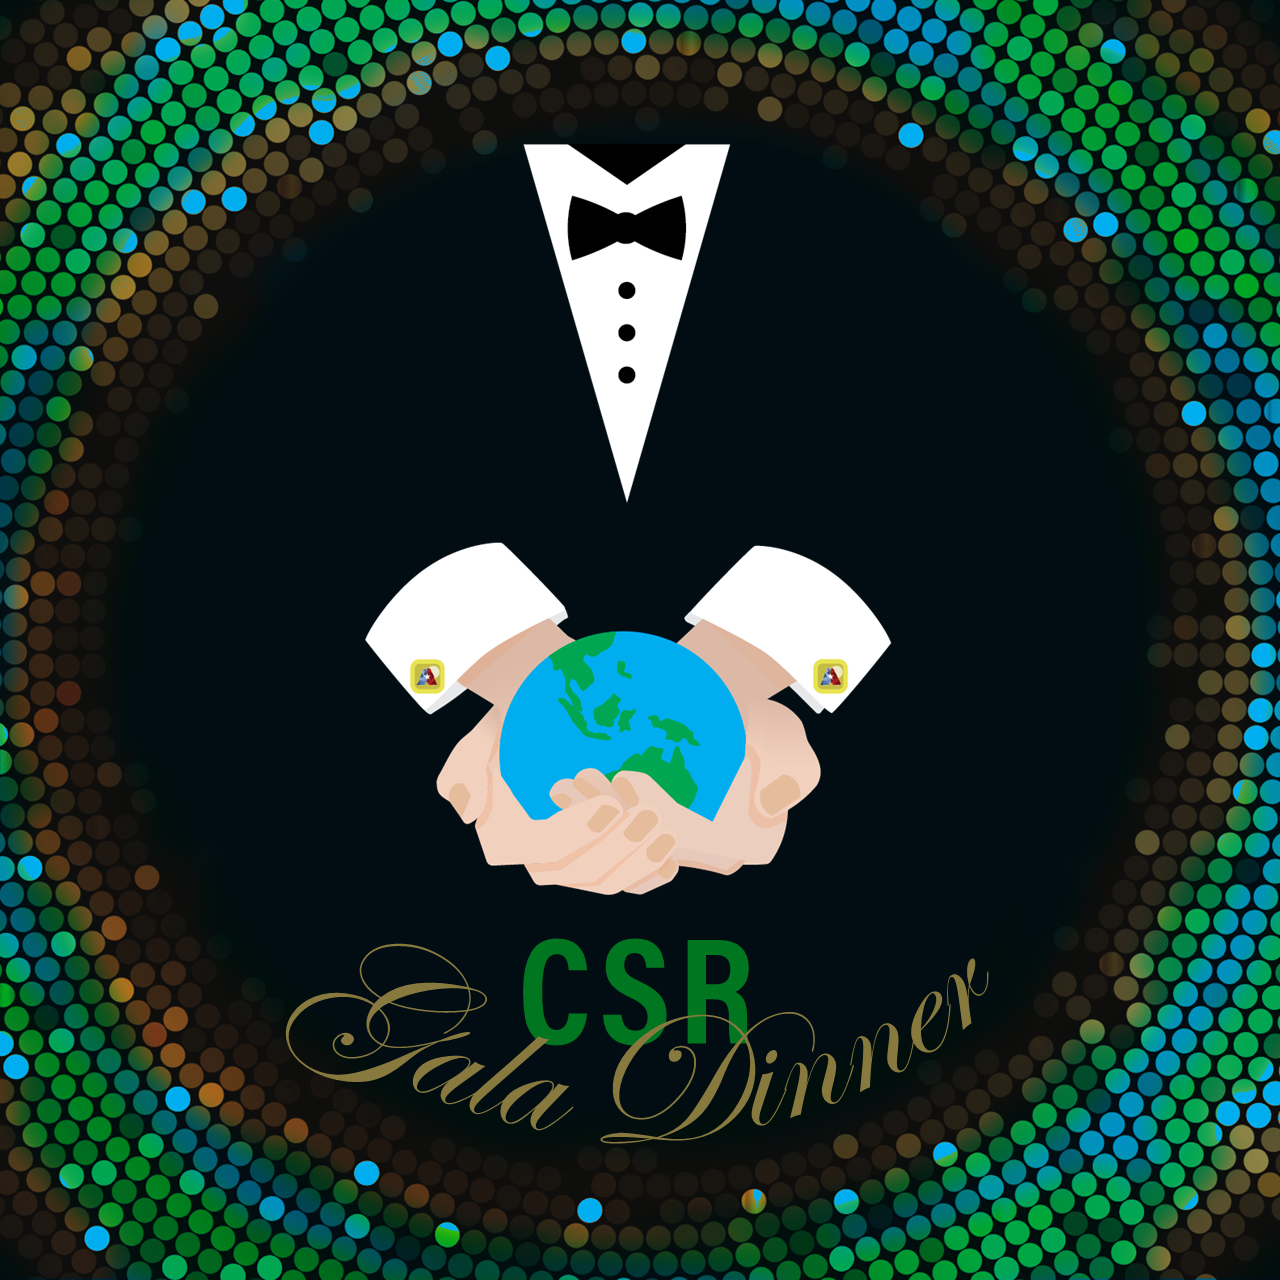 CSR Gala Dinner 2019